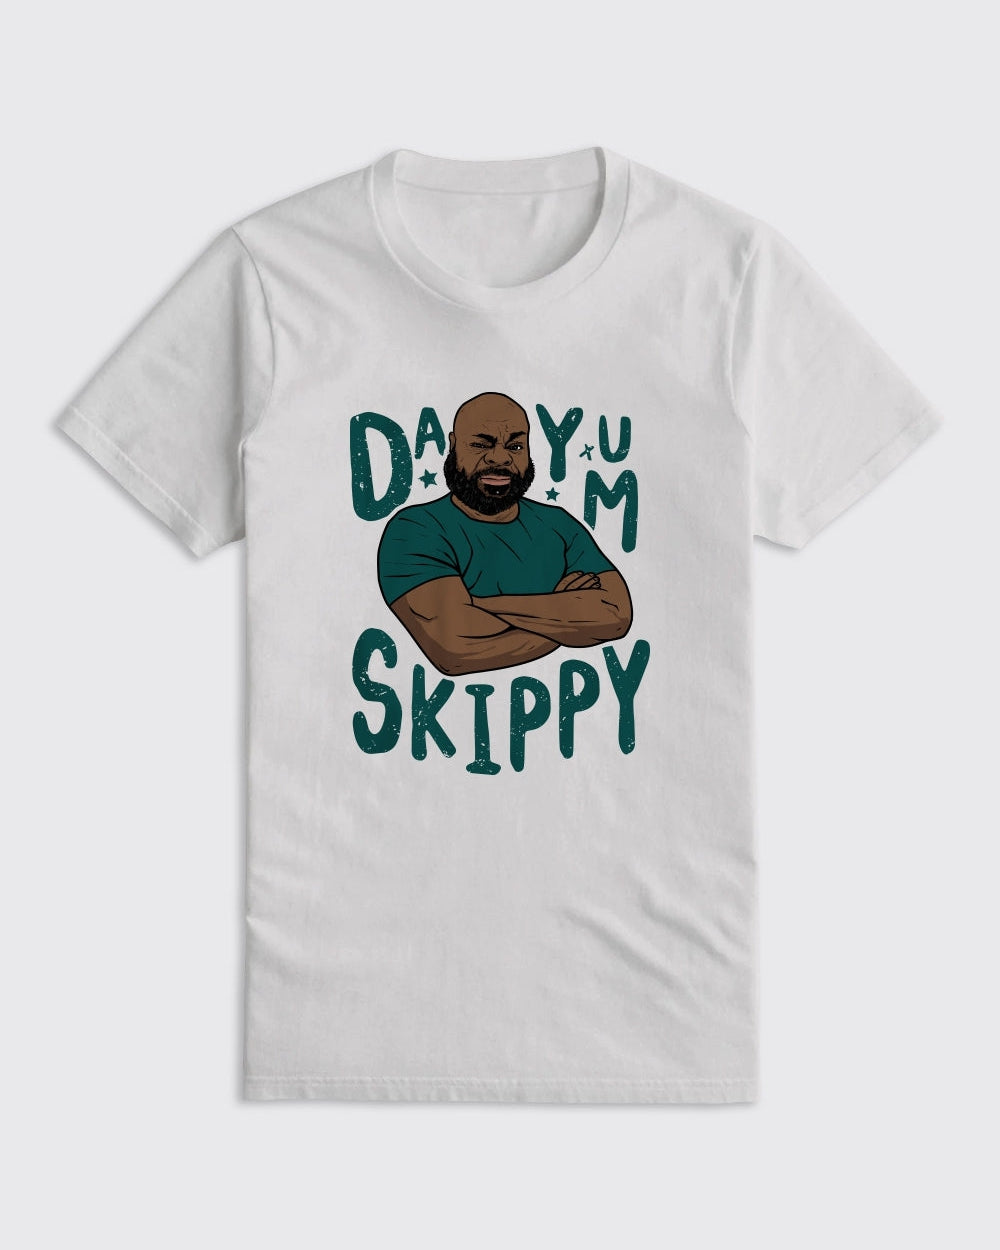 Hollis Thomas Dayum Skippy Shirt - Philly Sports Trips, T-Shirts - Philly Sports Shirts